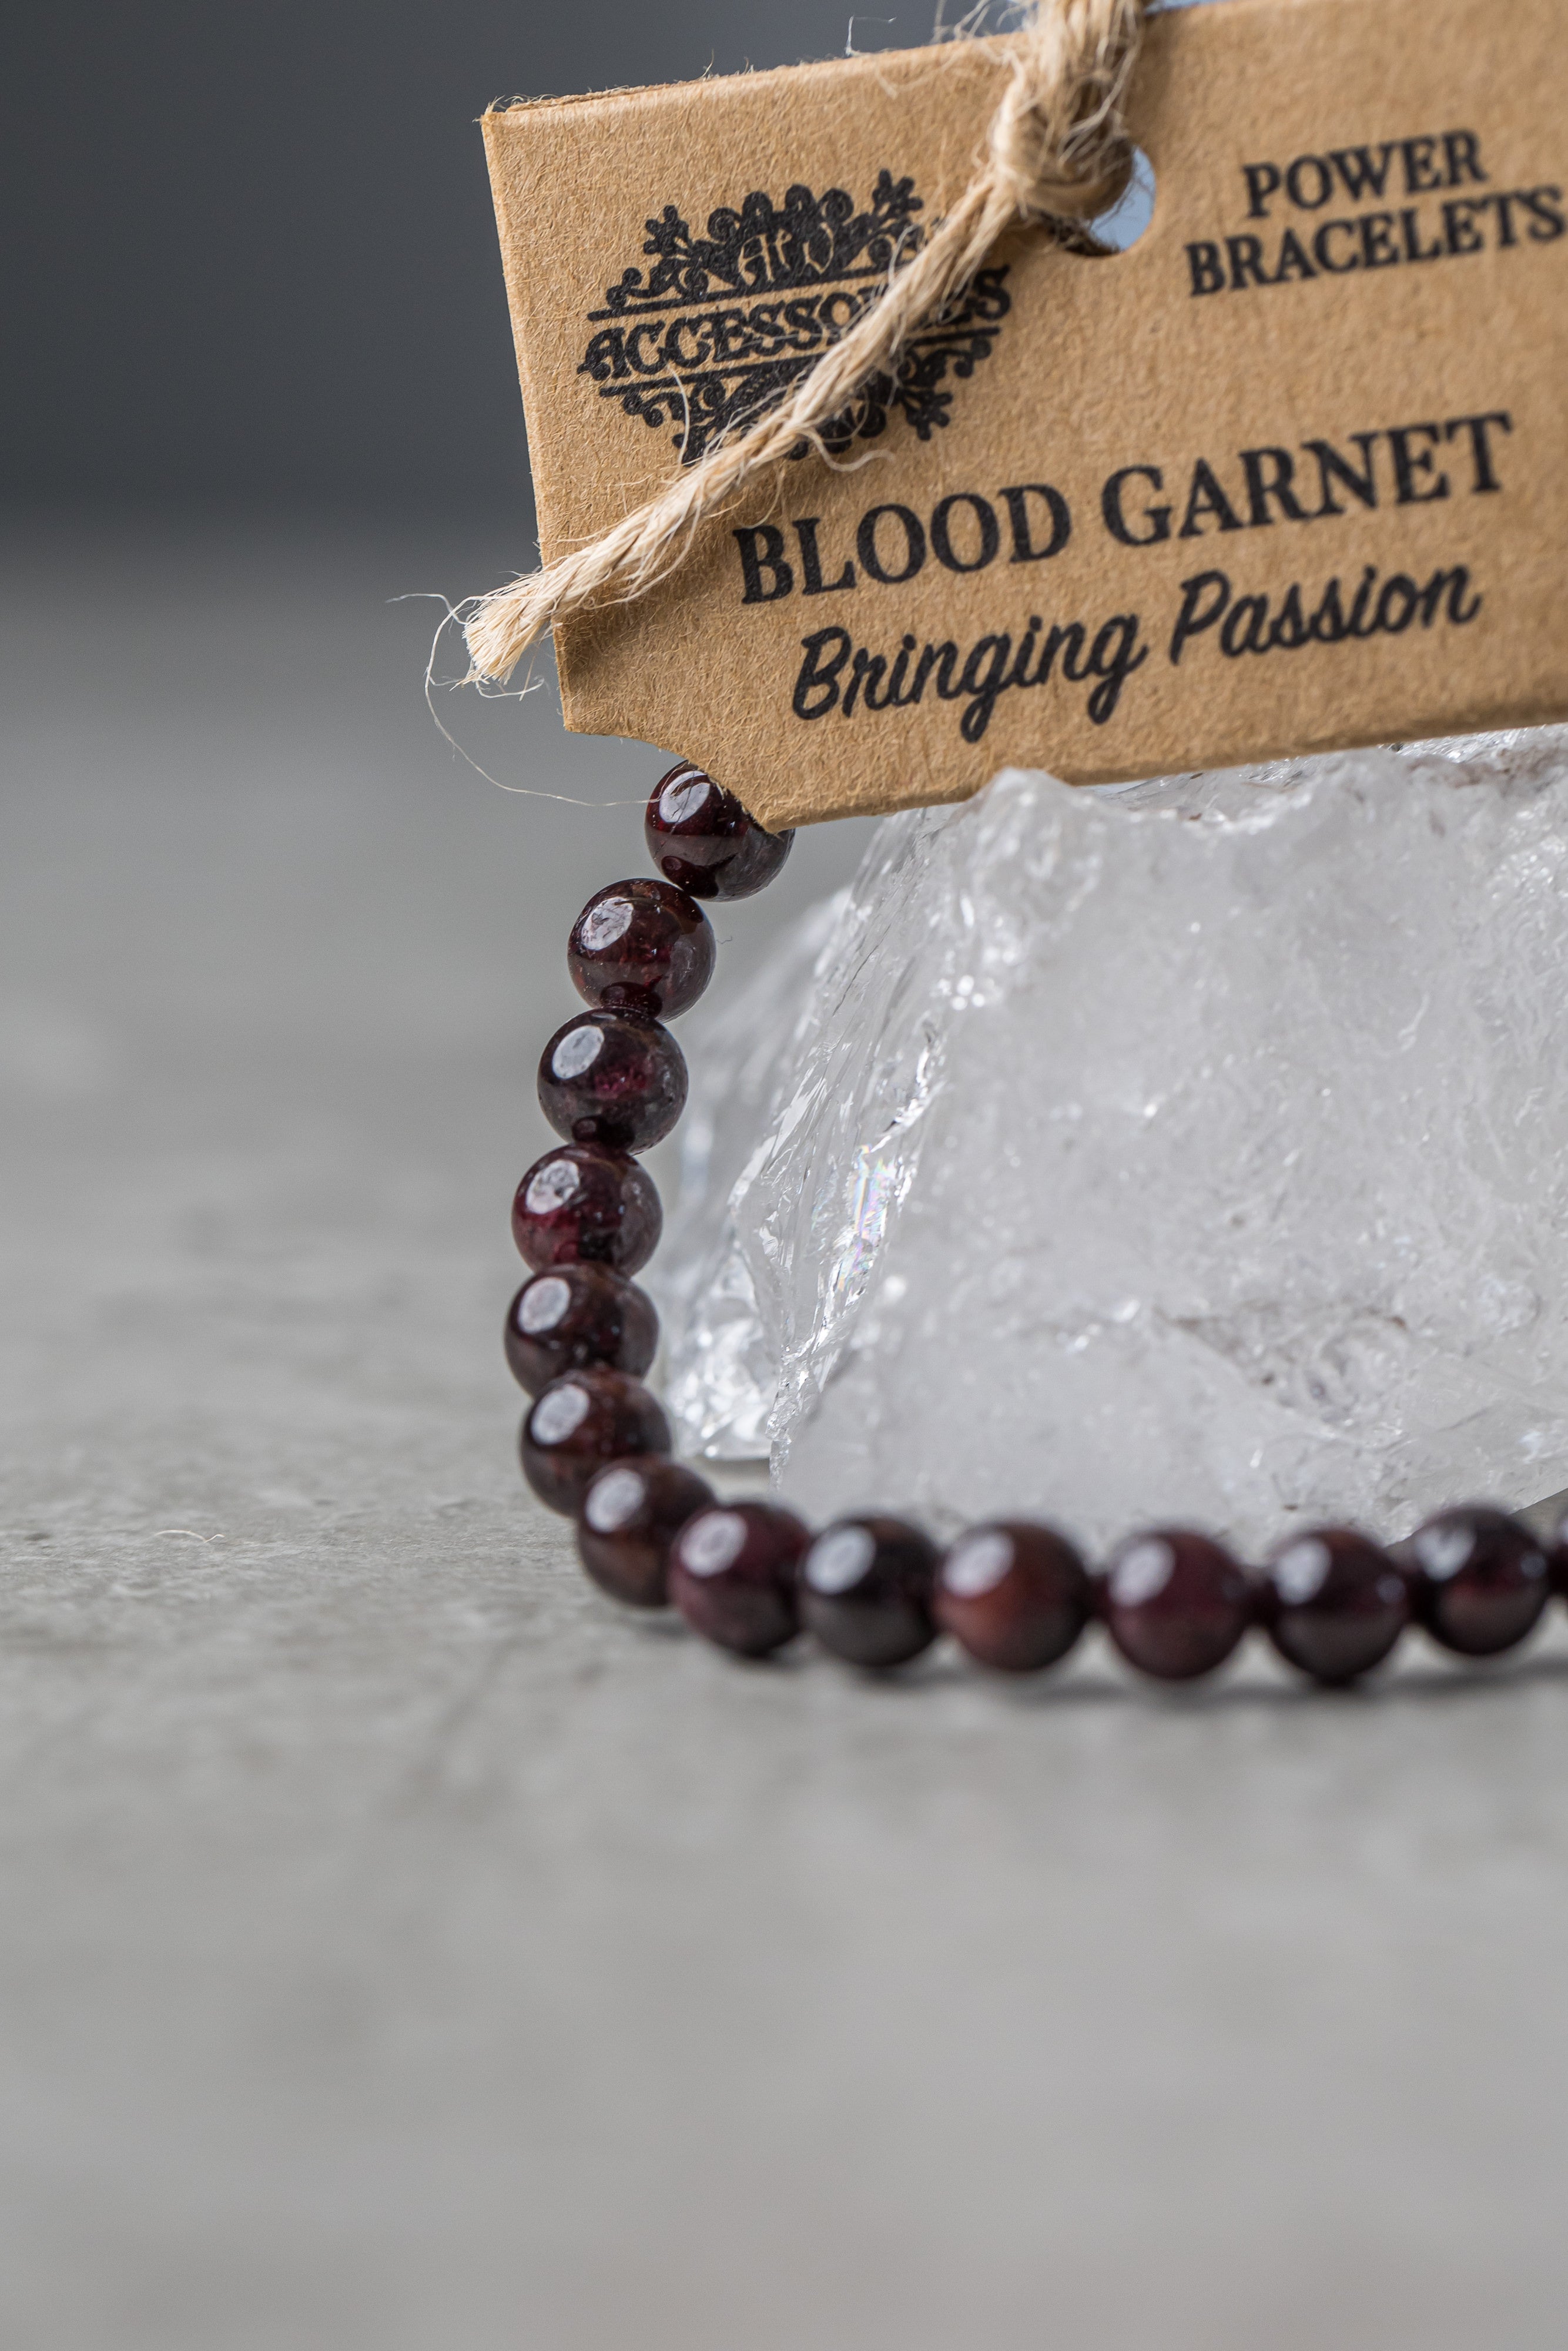 Blood Garnet Power Bracelet - Energising Crystal for Vitality, Passion & Root Chakra Balance - Everyday Rocks